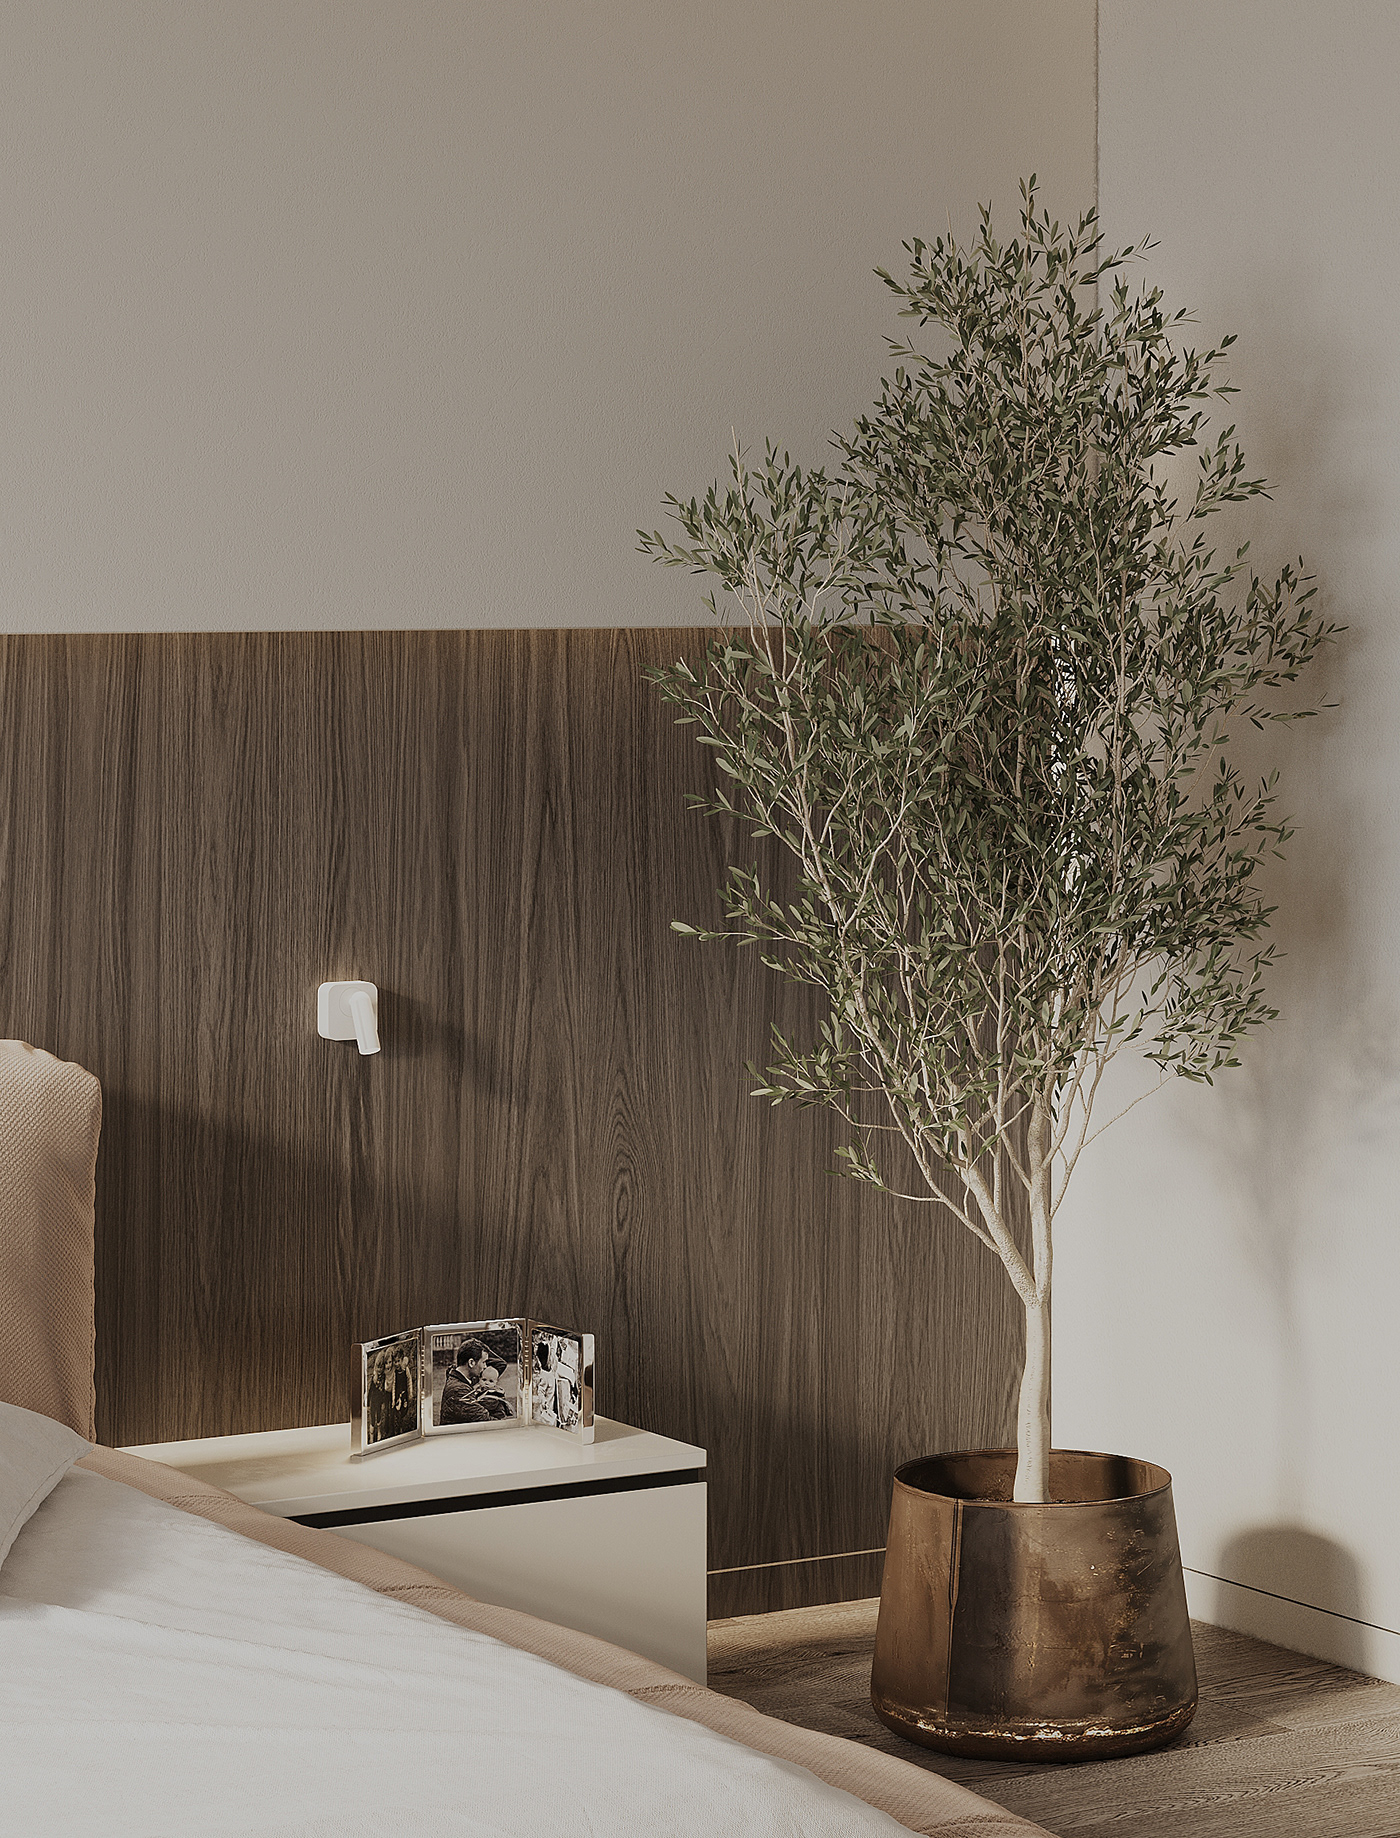 3dsmax visualization interior design  Render Interior bedroom design